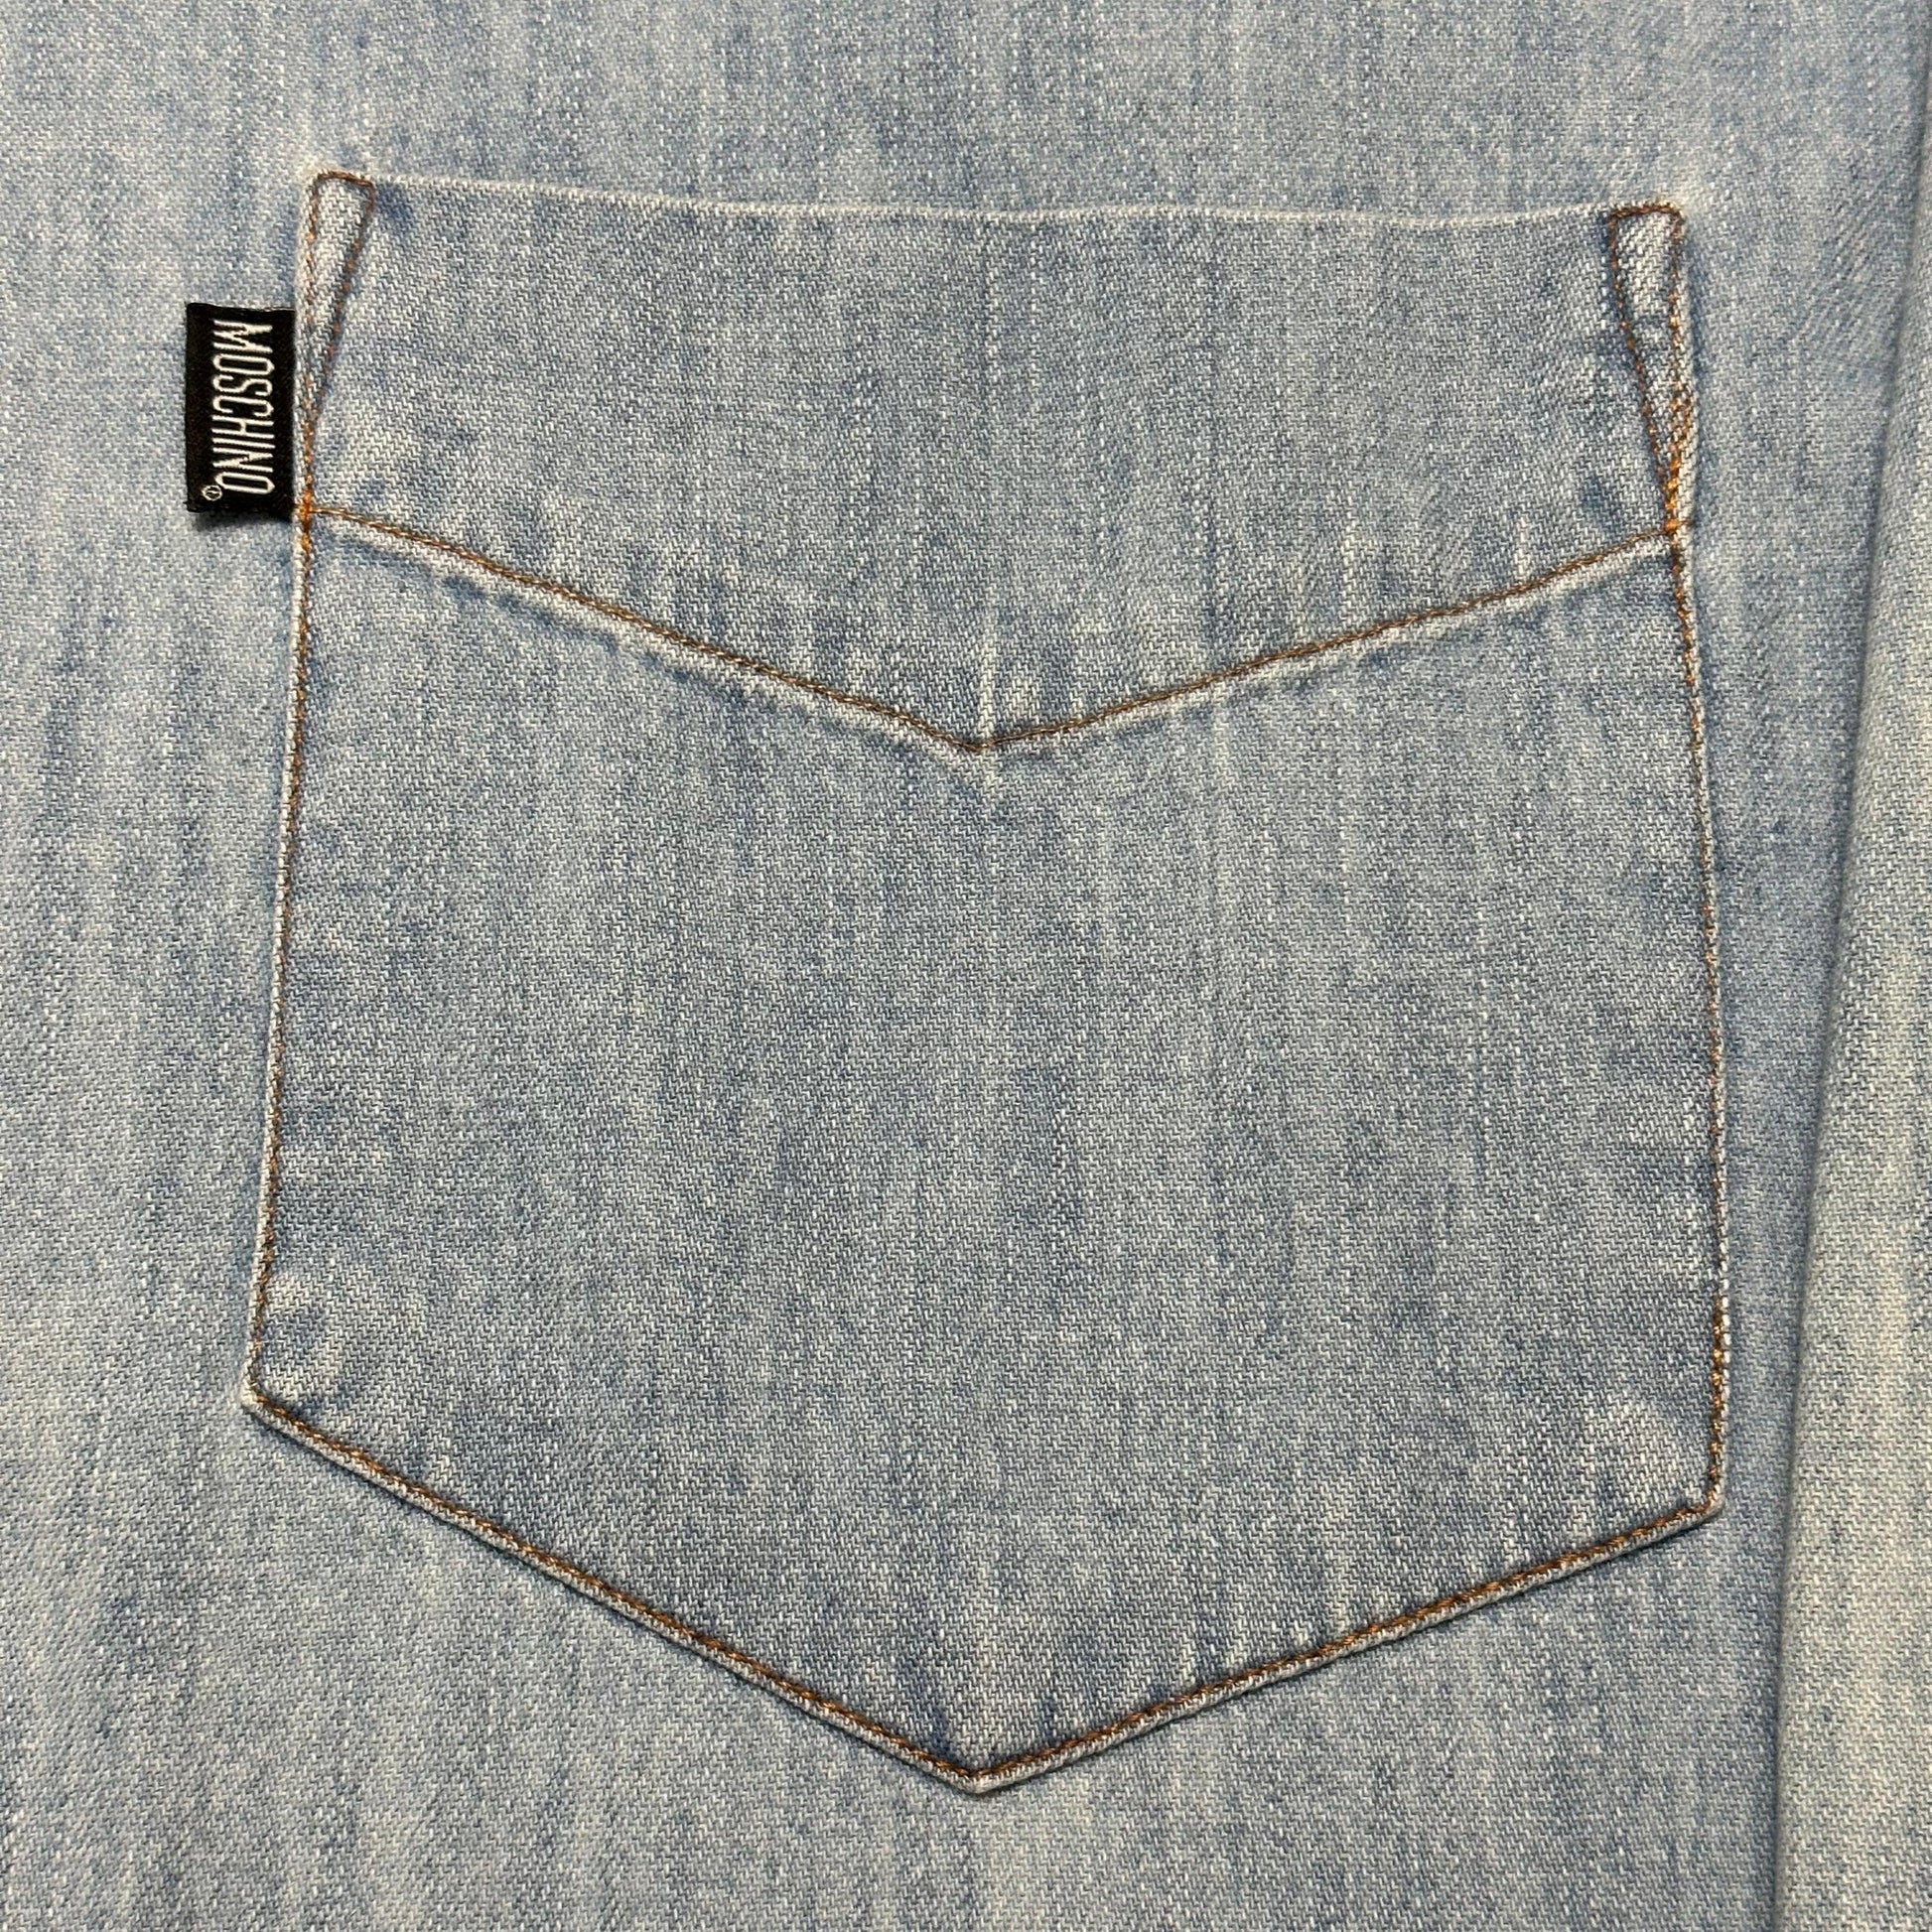 Moschino Jeans ‘94 “denim” shirt - L - Known Source